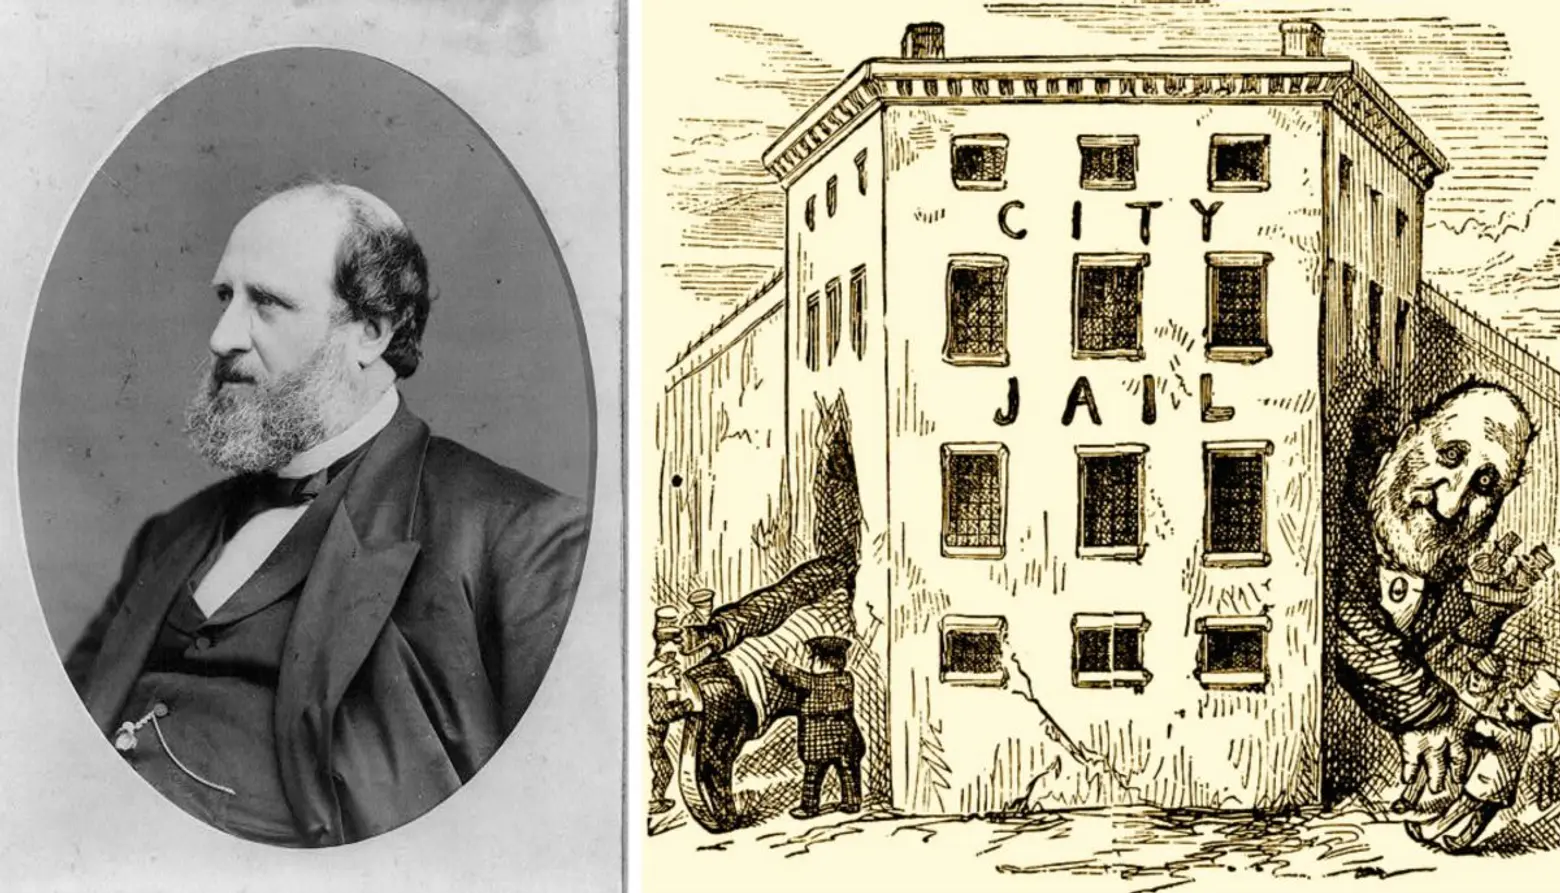 Ludlow Street Jail, Boss Tweed, New York Alimony Club, historic NYC jails